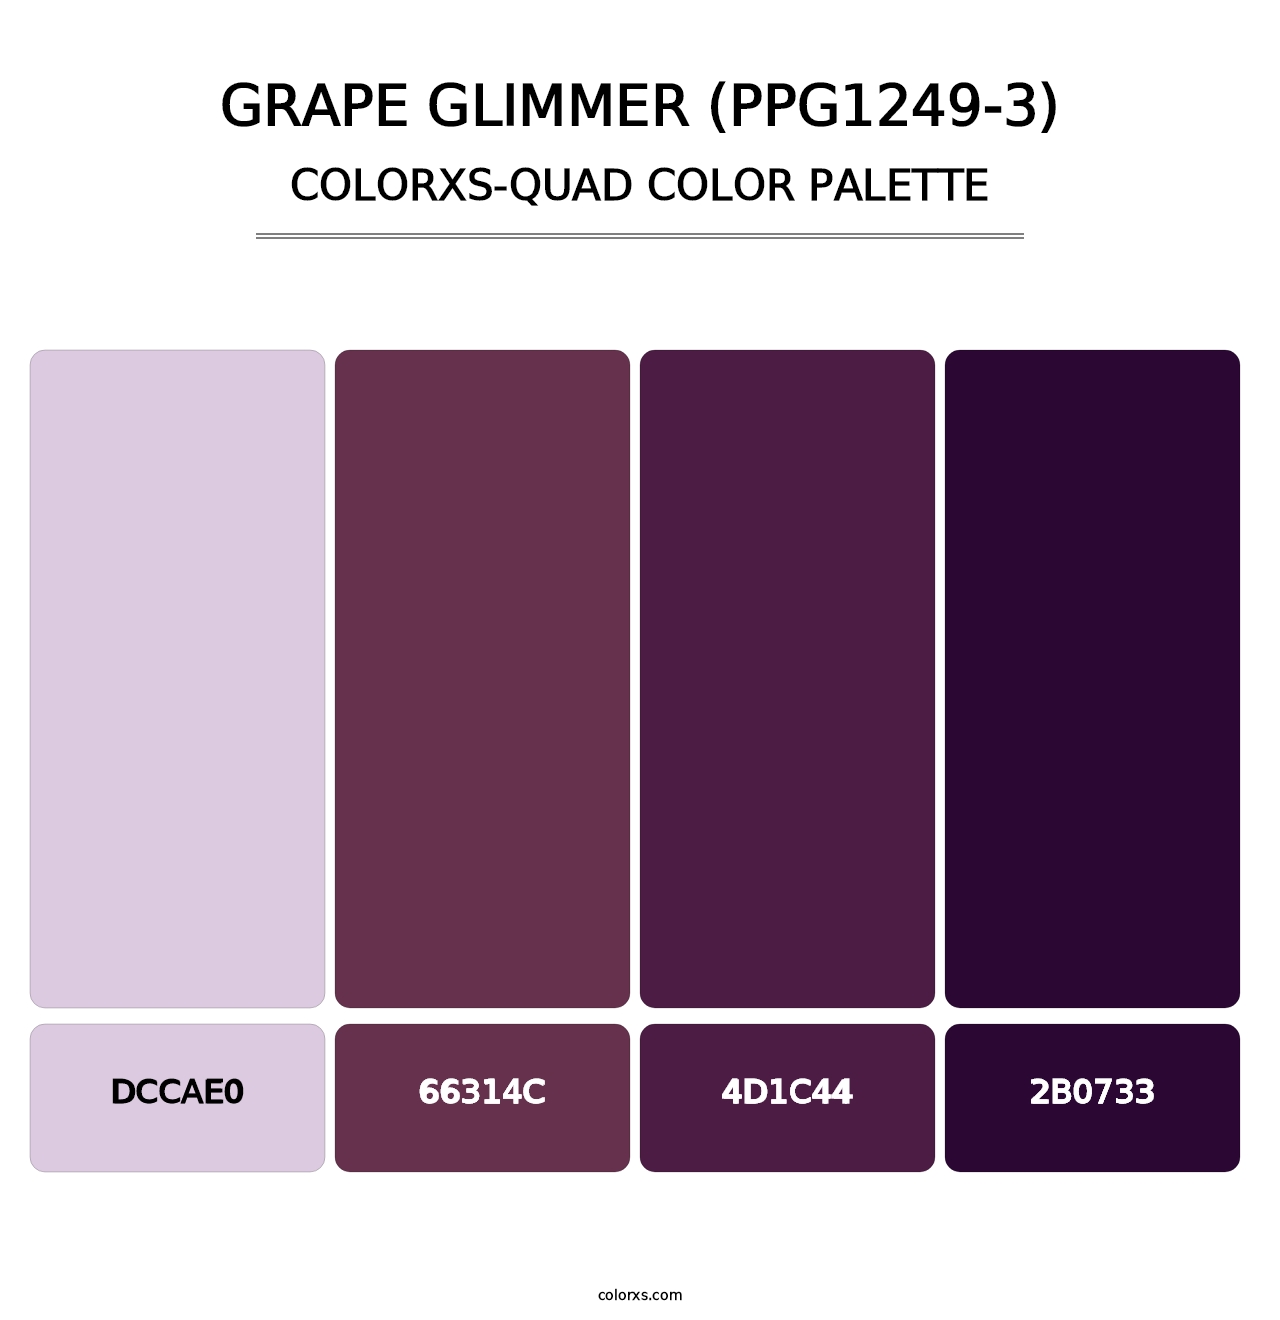 Grape Glimmer (PPG1249-3) - Colorxs Quad Palette